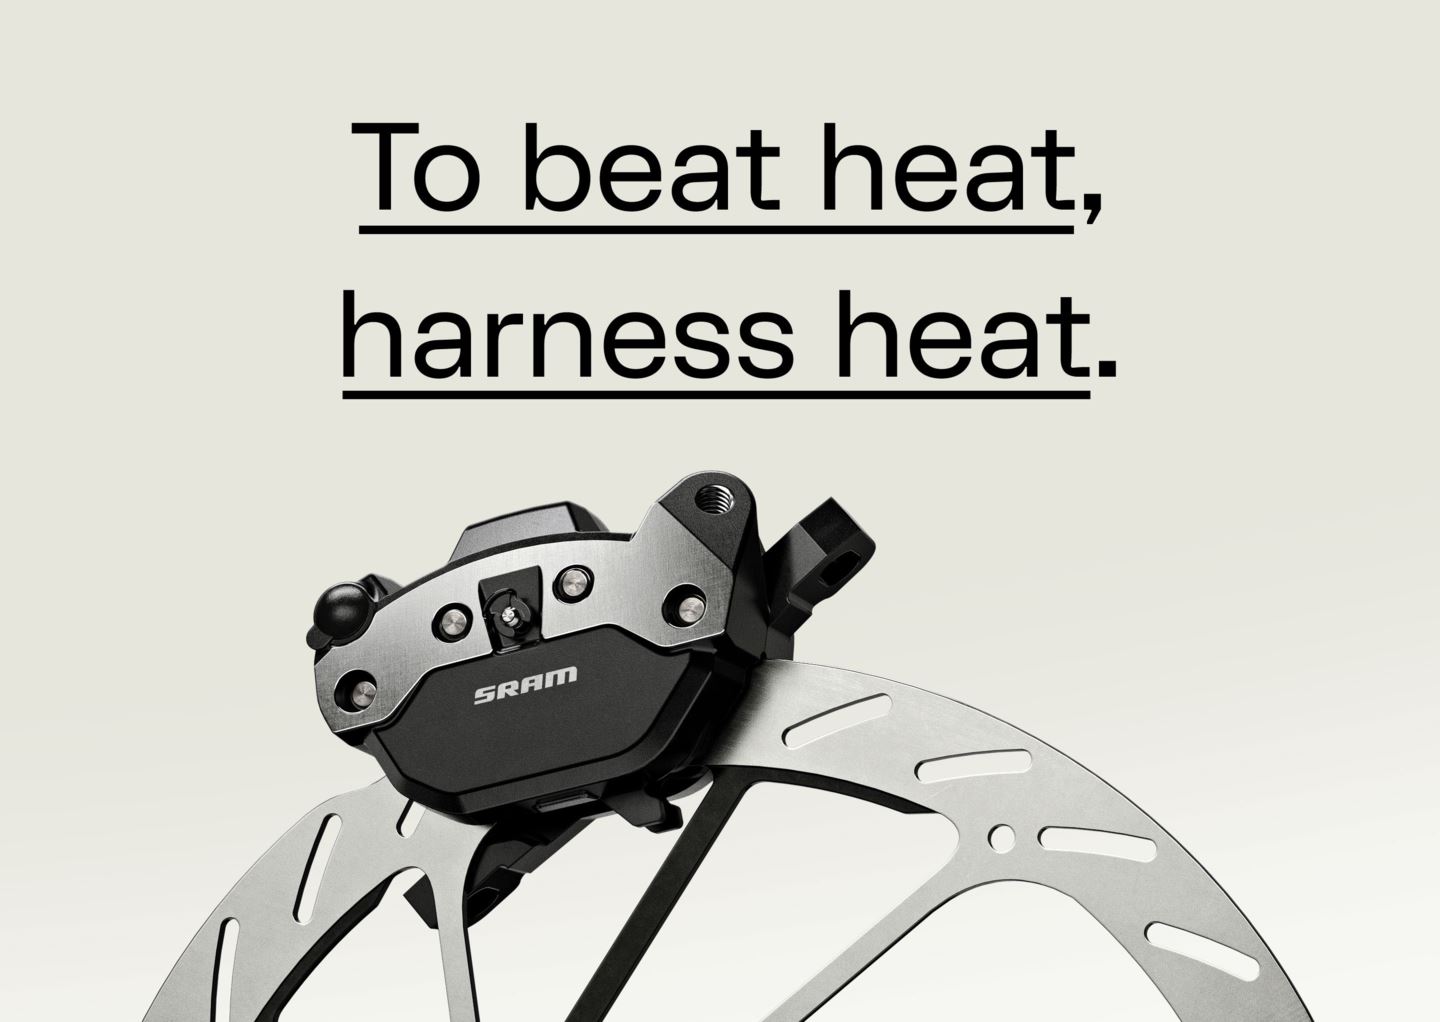 To beat heat, harness heat.